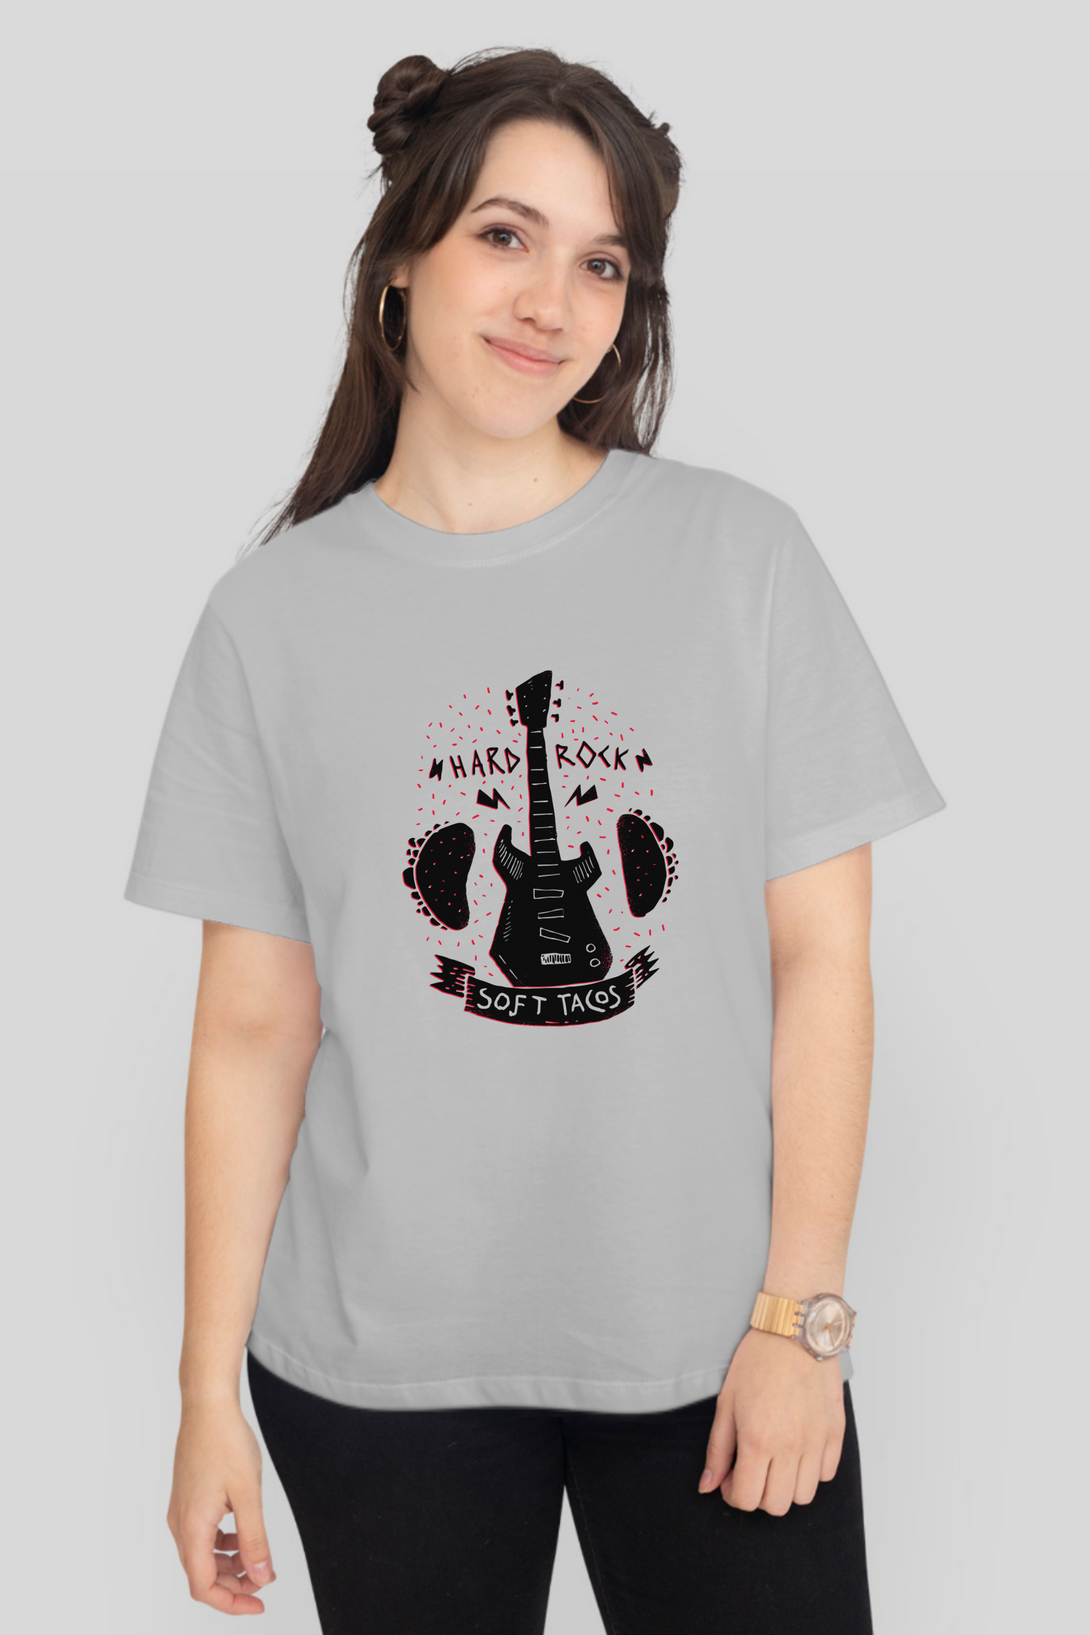 Hard Rock Printed T-Shirt For Women - WowWaves - 7